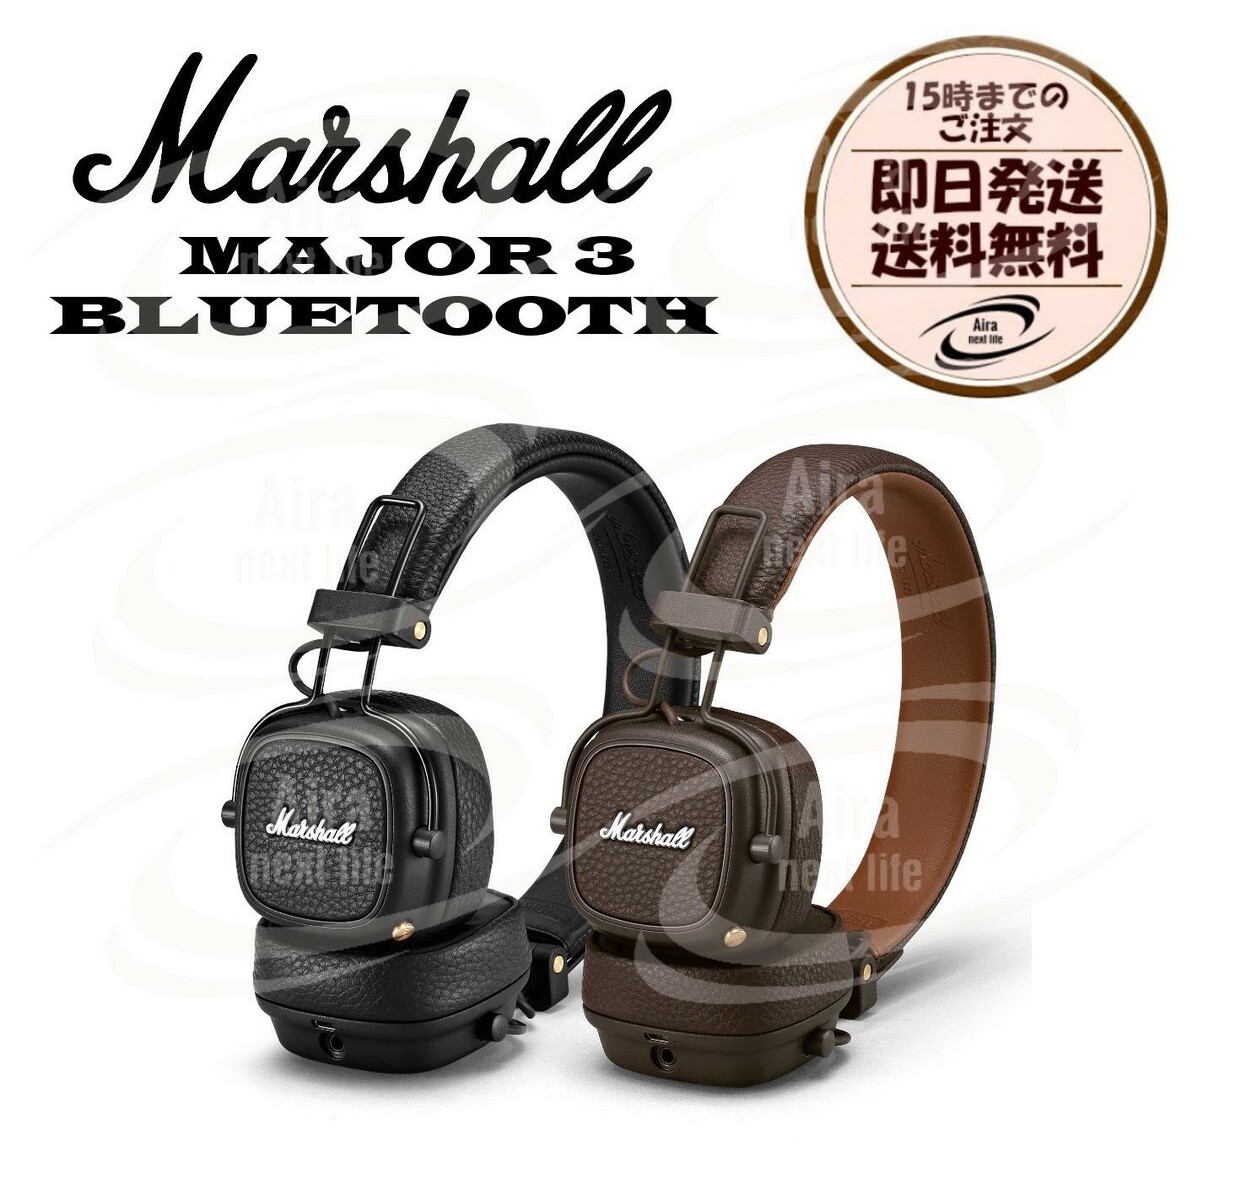 Marshall MAJOR III BLUETOOTH ワイヤレス/ブラウン desasukasenang.com